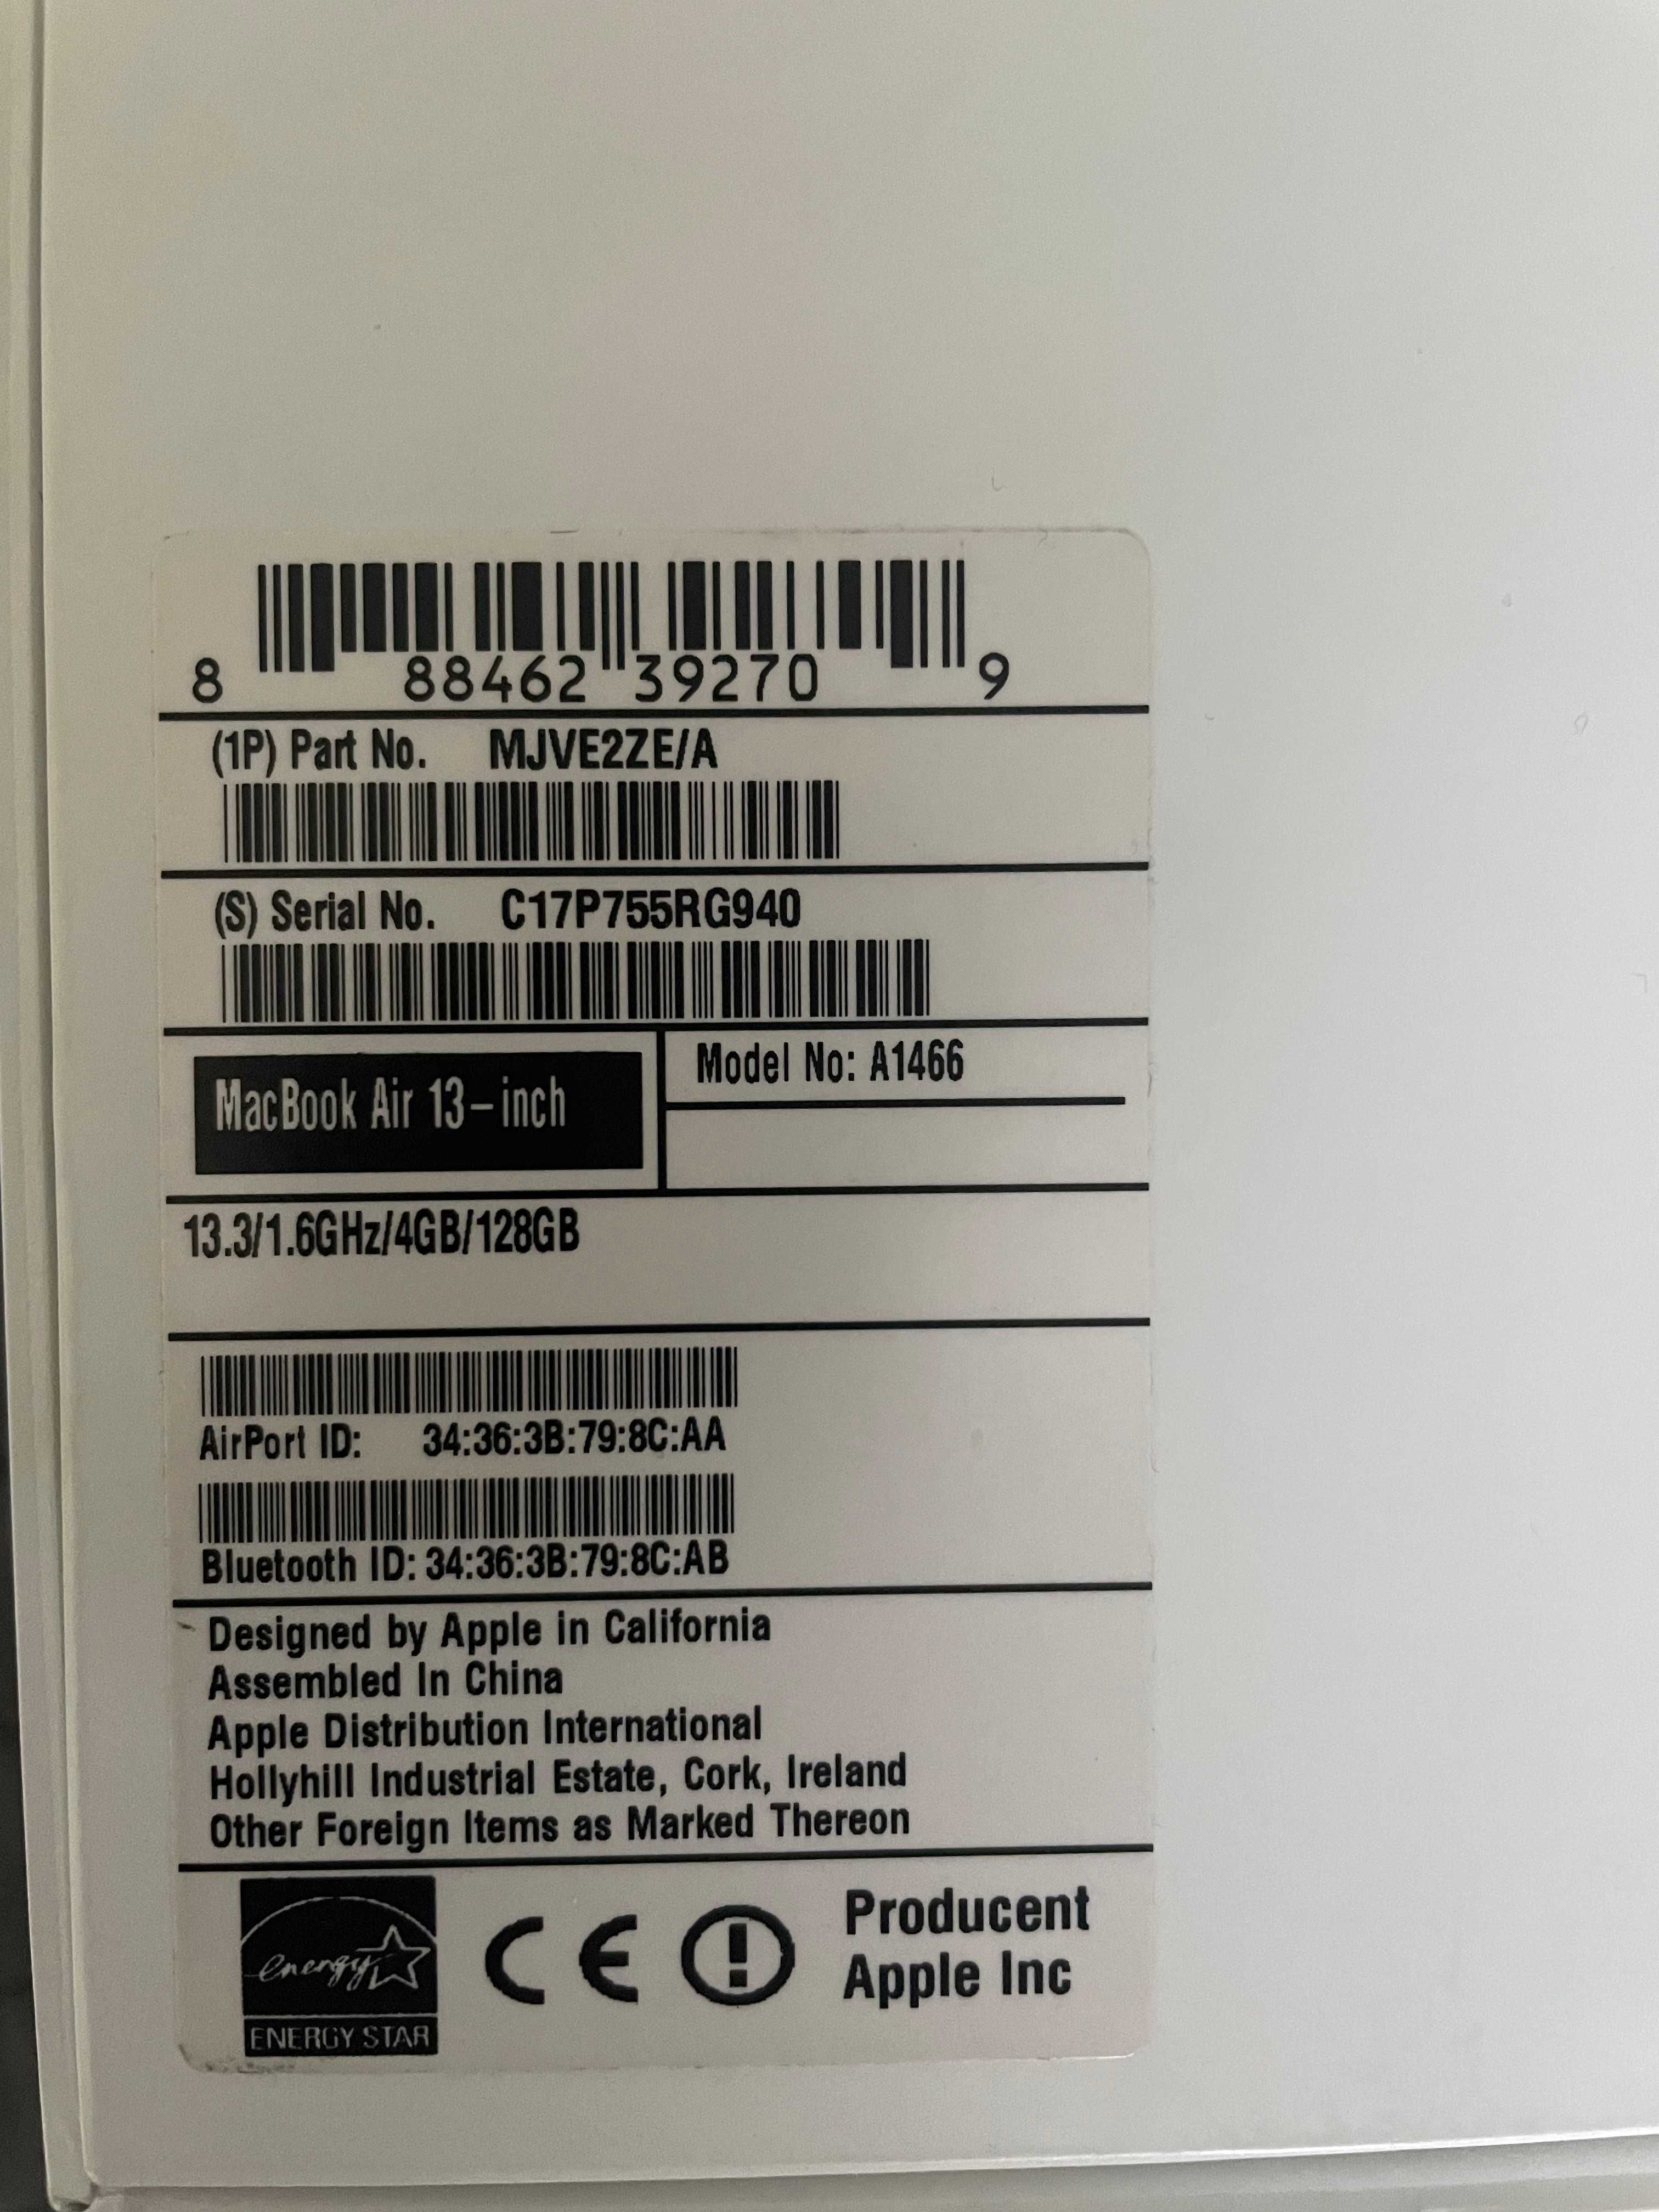 Mcbook Air od Apple 13 cal z 2015rok  - Core i5 1,6 GHz